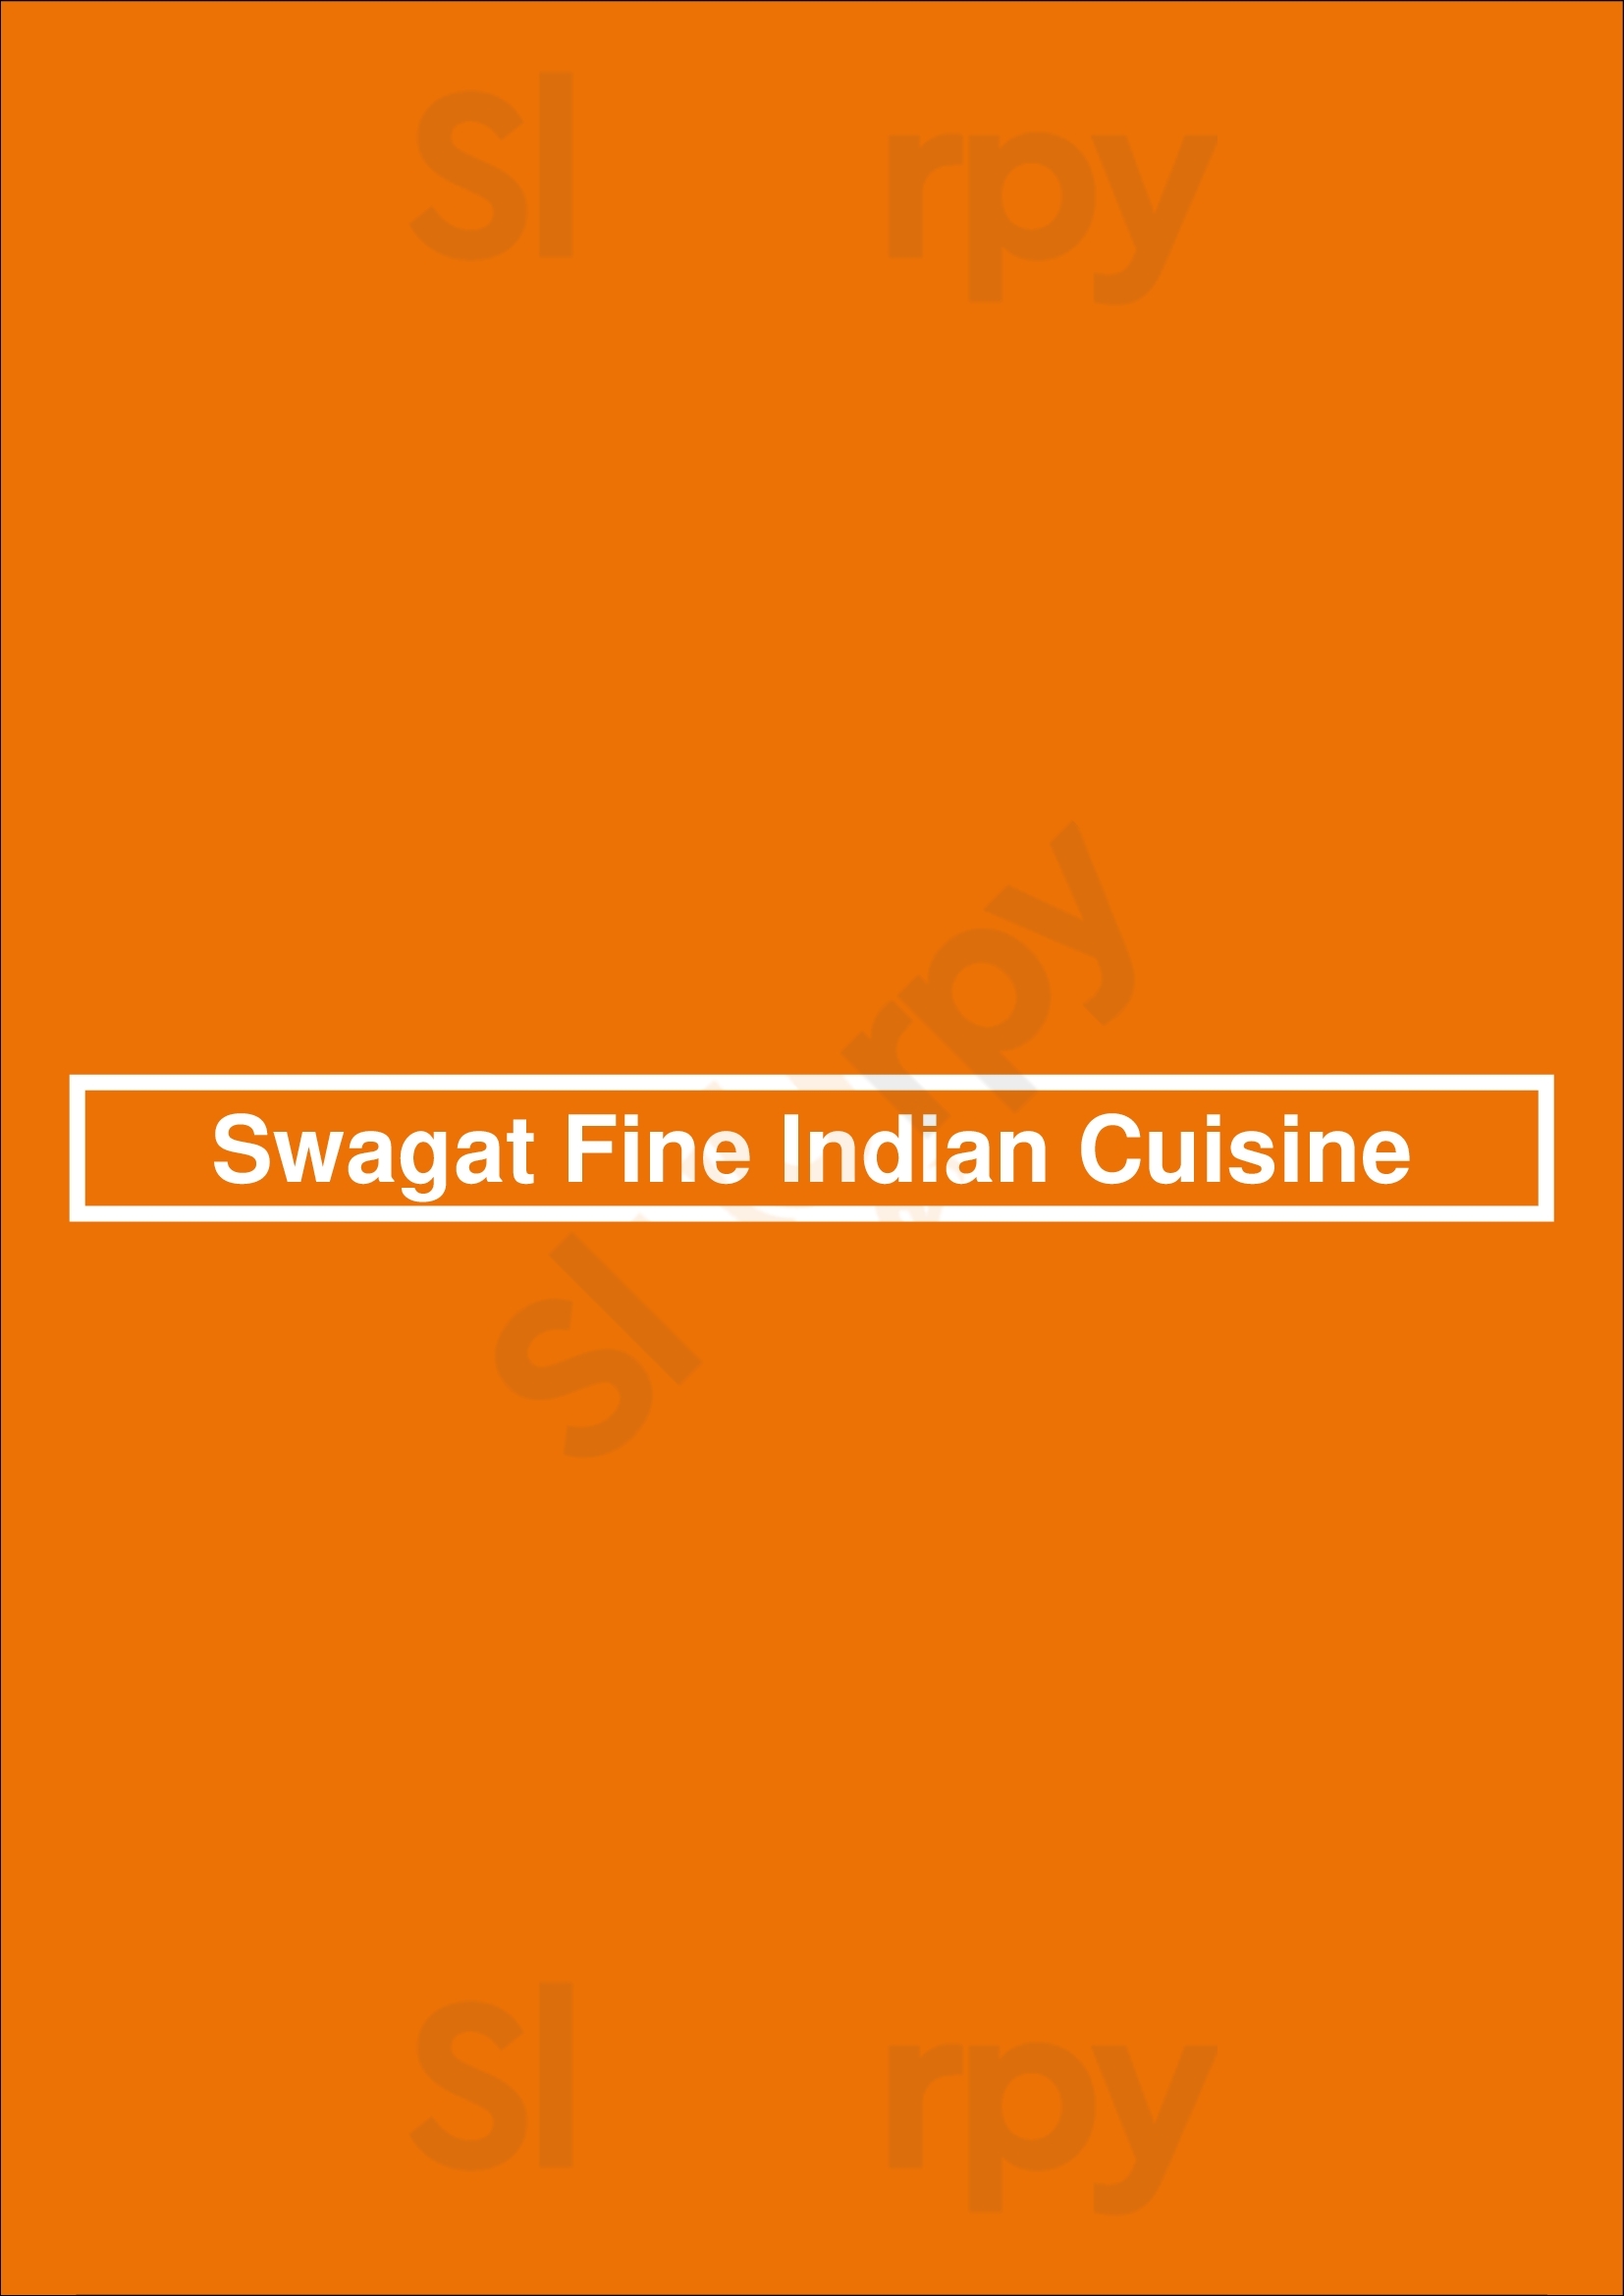 Swagat Fine Indian Cuisine Kansas City Menu - 1